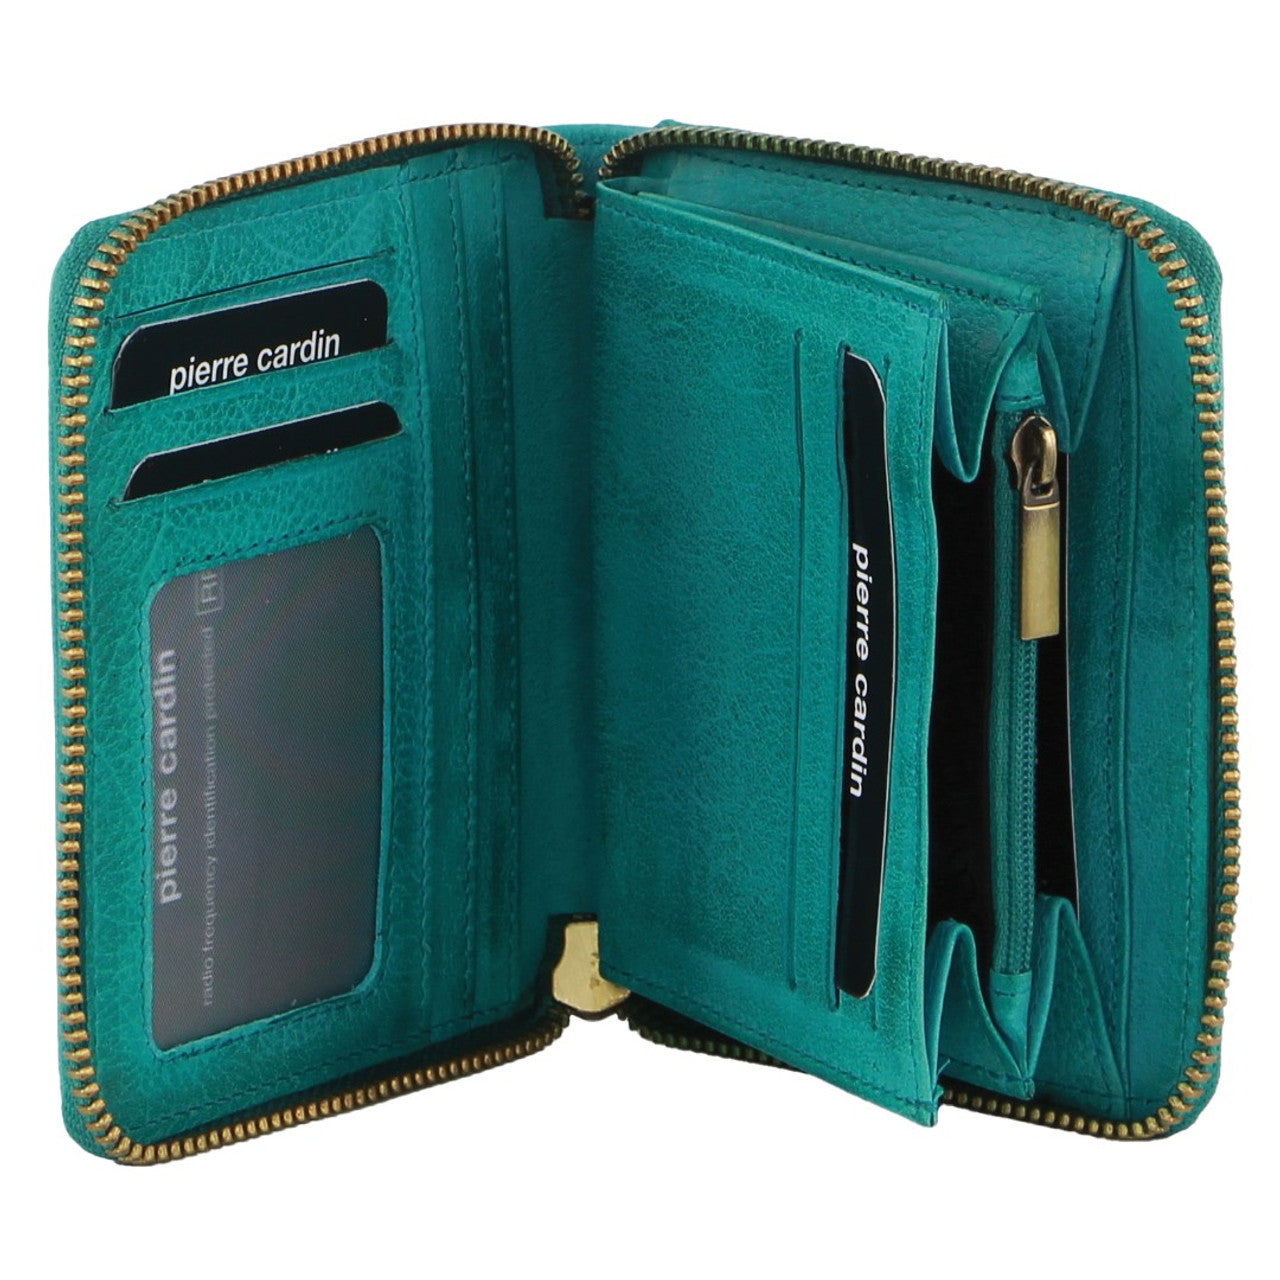 Pierre Cardin - PC3633 Small zip Wallet - Turquoise - 0